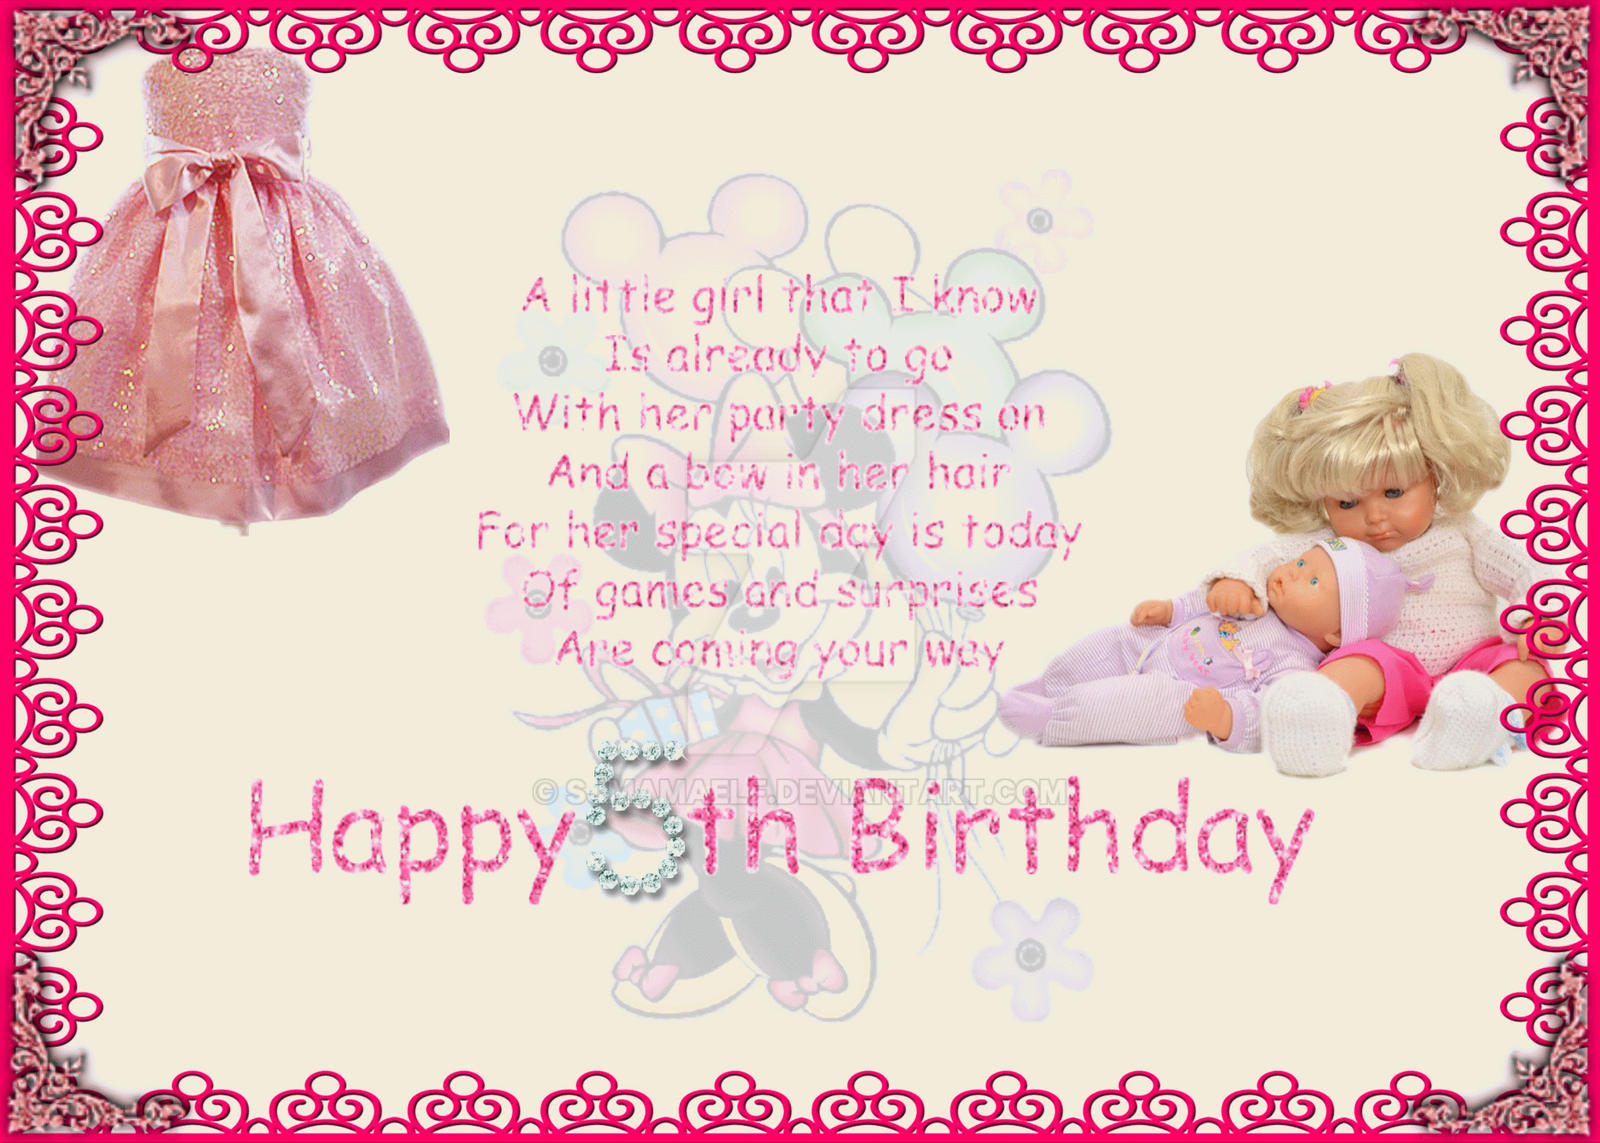 Happy 5th birthday for girl by SJMAMAELF on DeviantArt